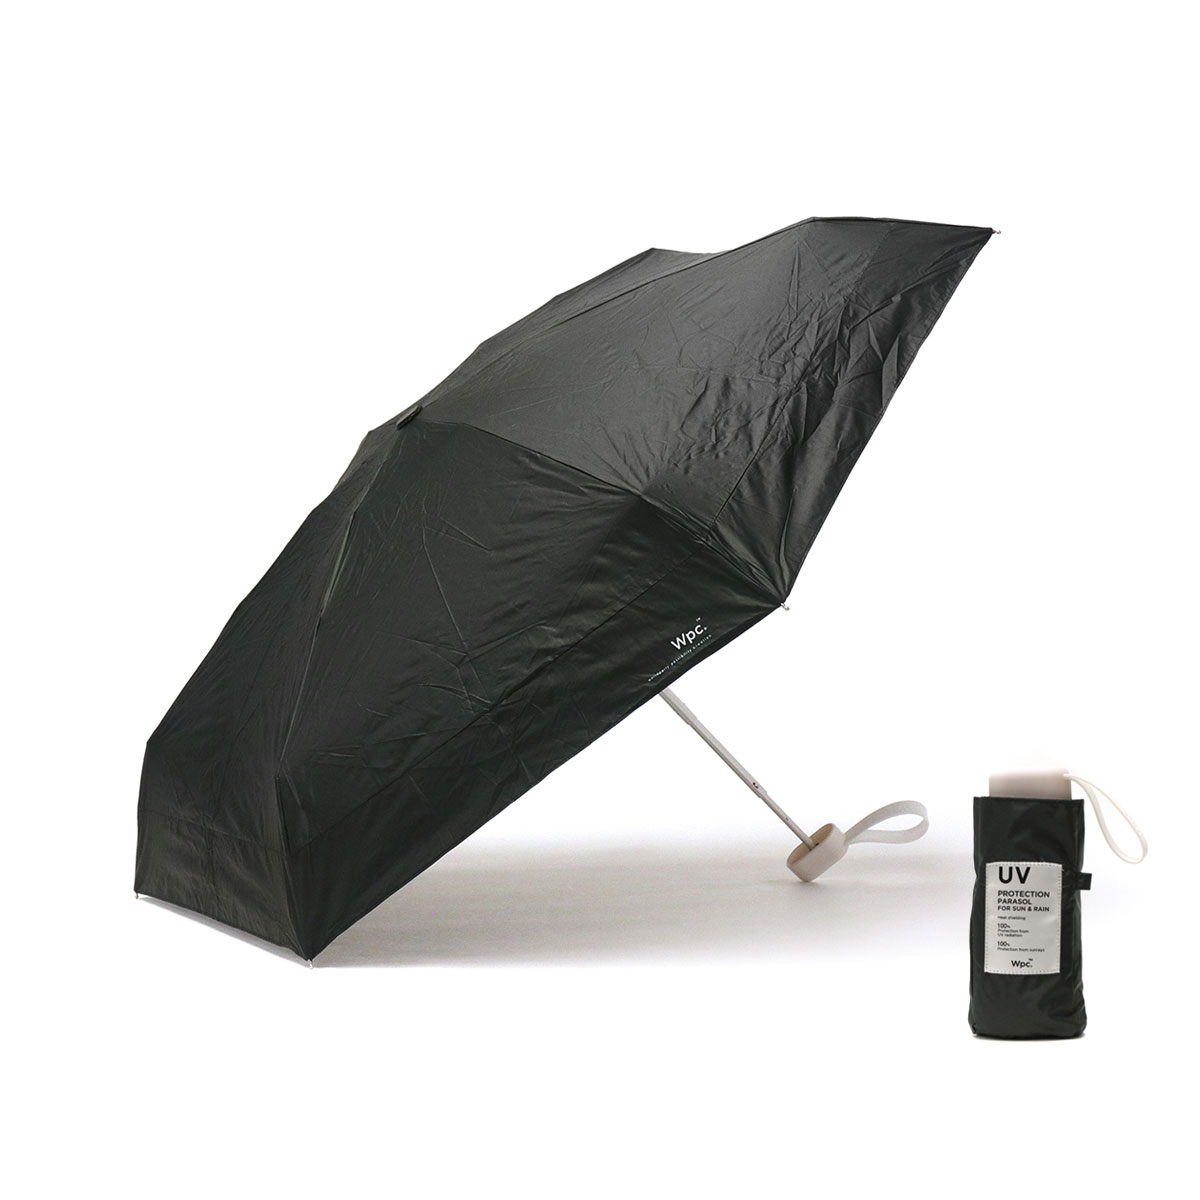 Wpc. 折りたたみ傘 軽量 レディース メンズ 晴雨兼用 Wpc ダブリュピーシー 遮光 傘 日傘...